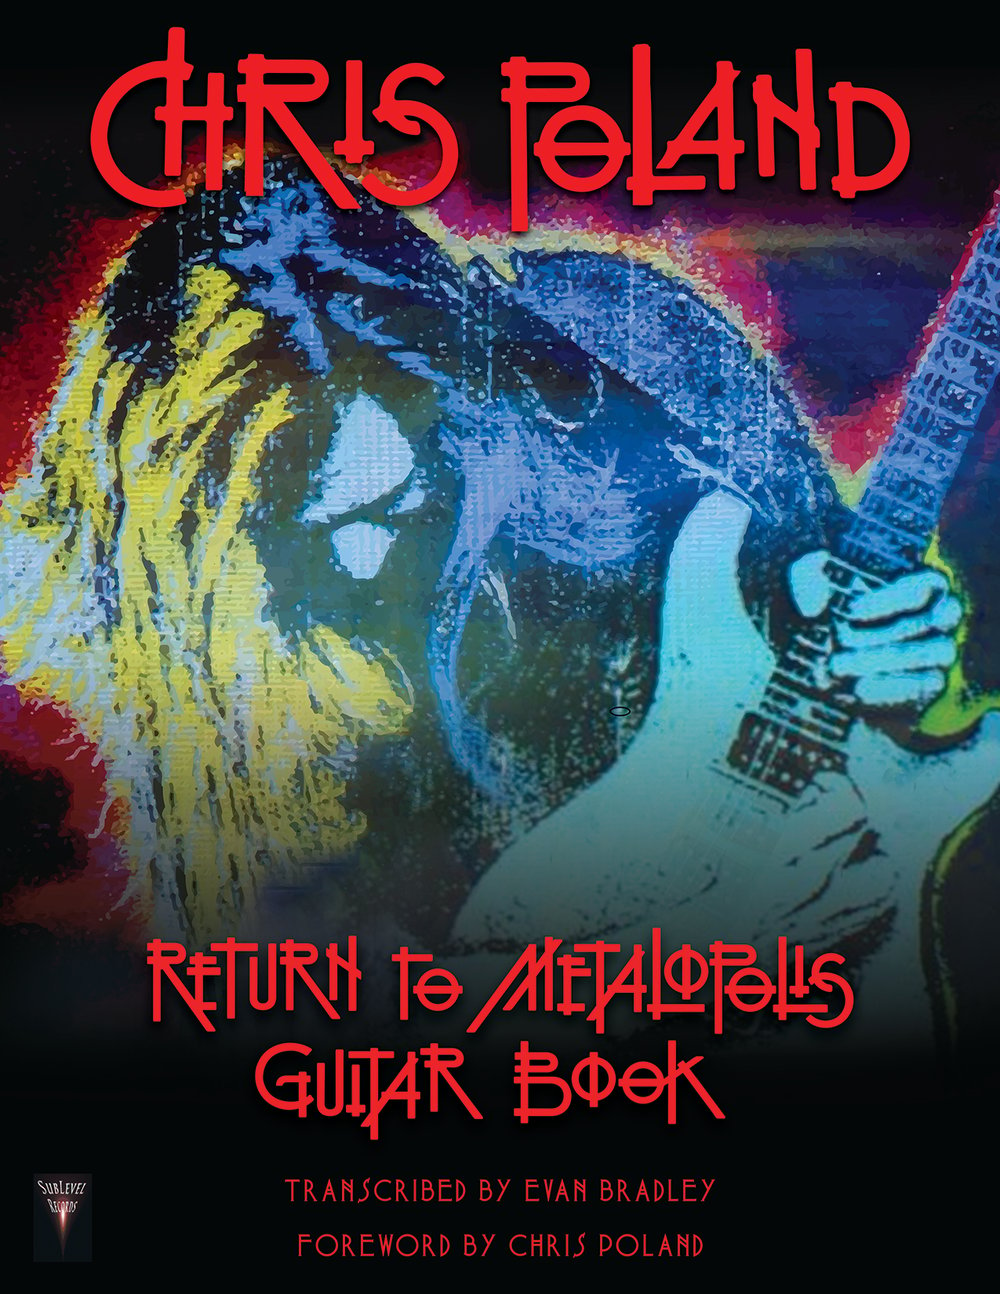 Chris Poland - Return to Metalopolis Guitar Book (Print Edition)